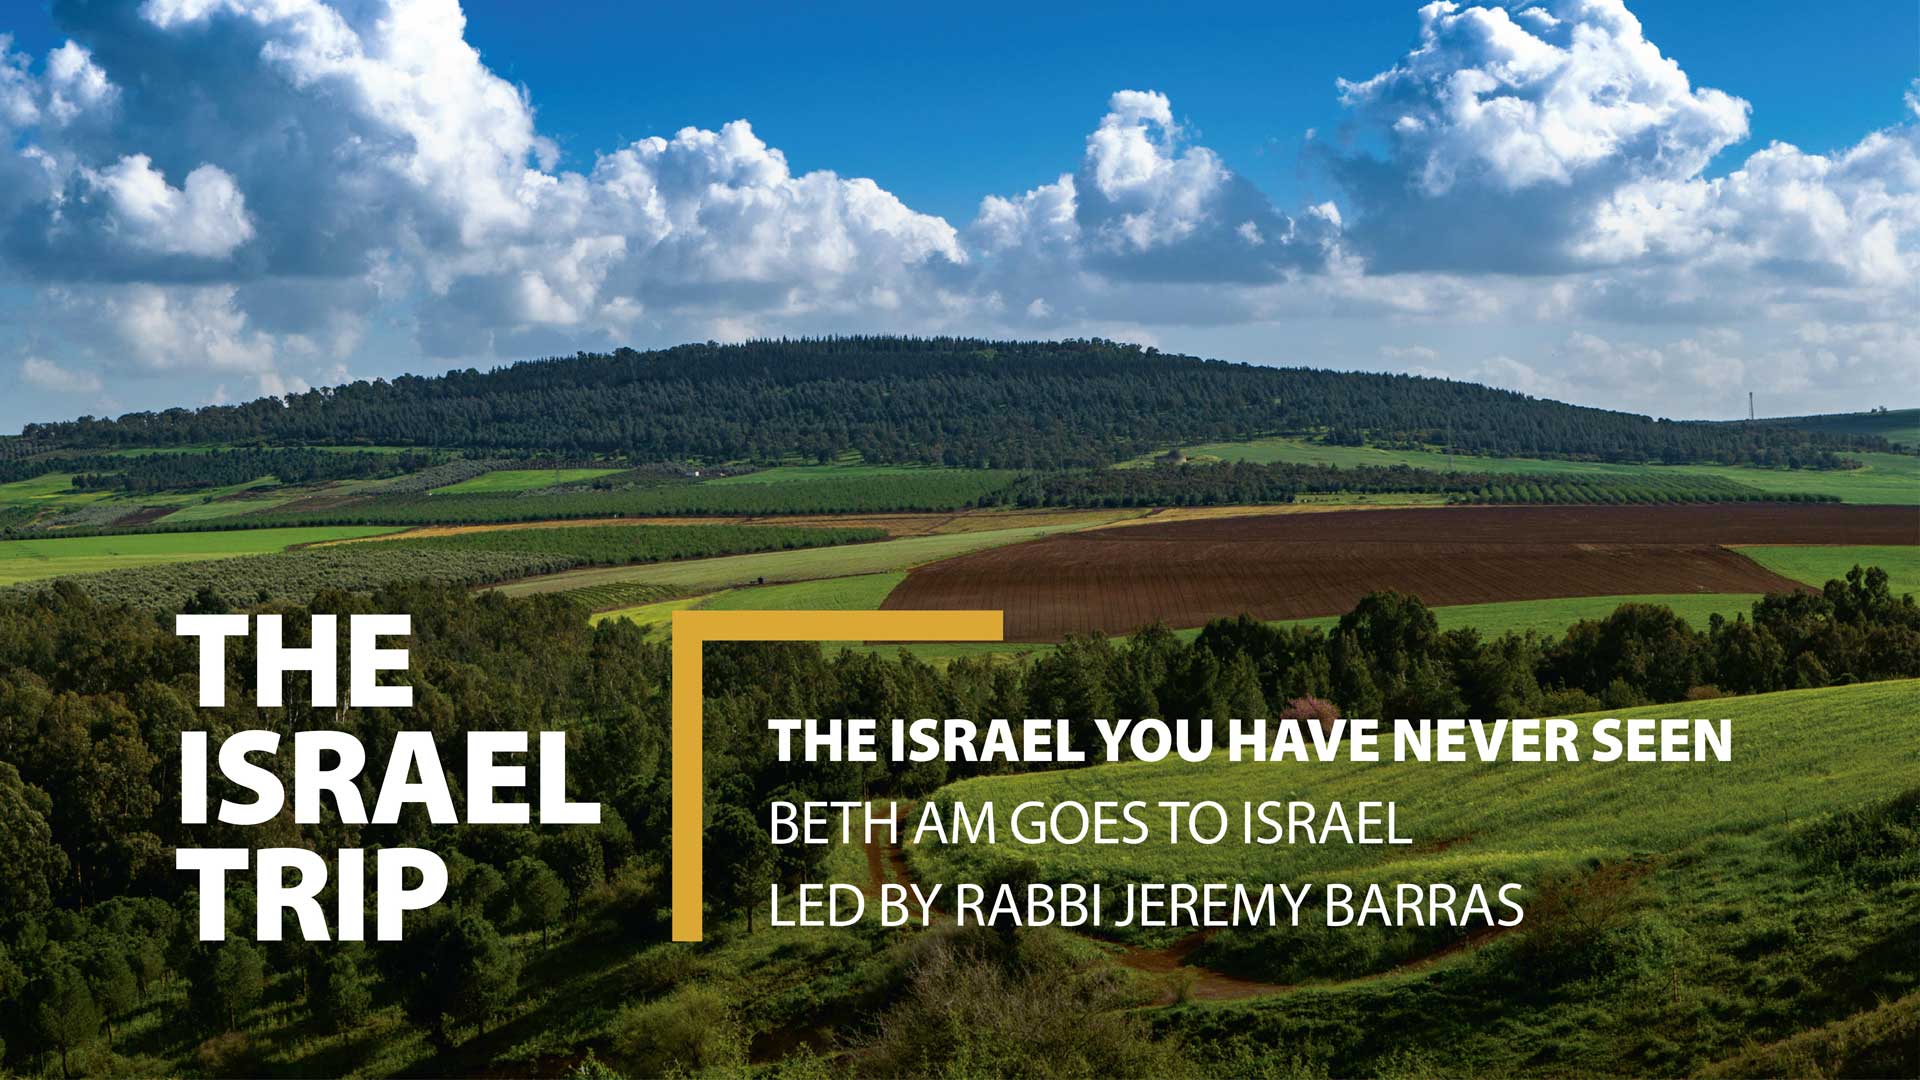 The Israel Trip led by Rabbi Jeremy Barras